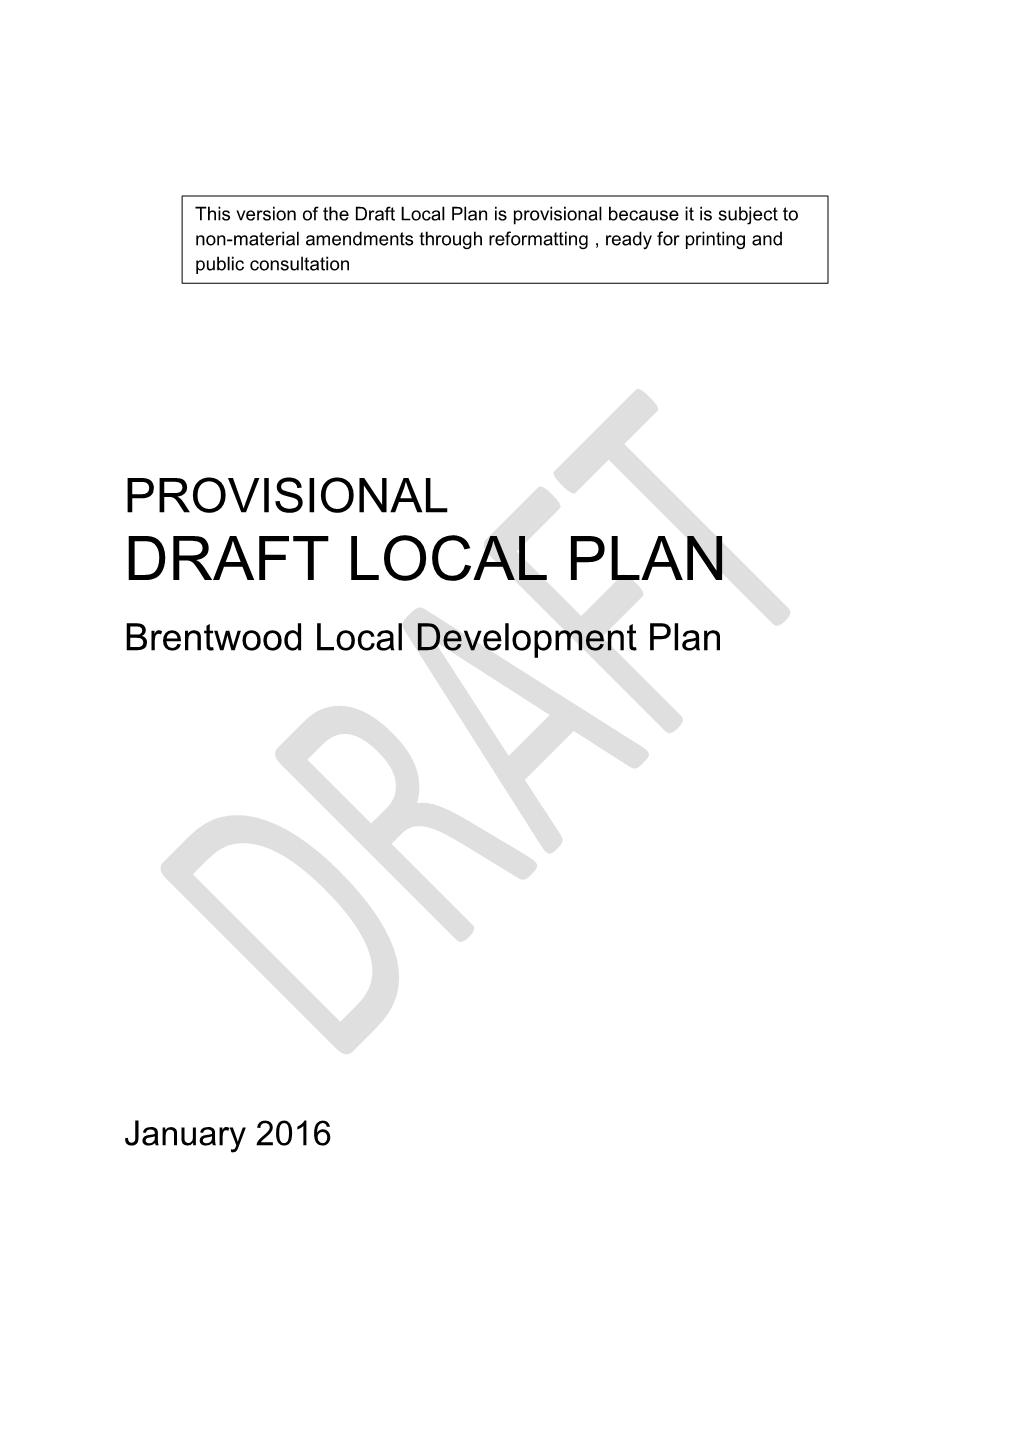 Provisional Draft Local Plan